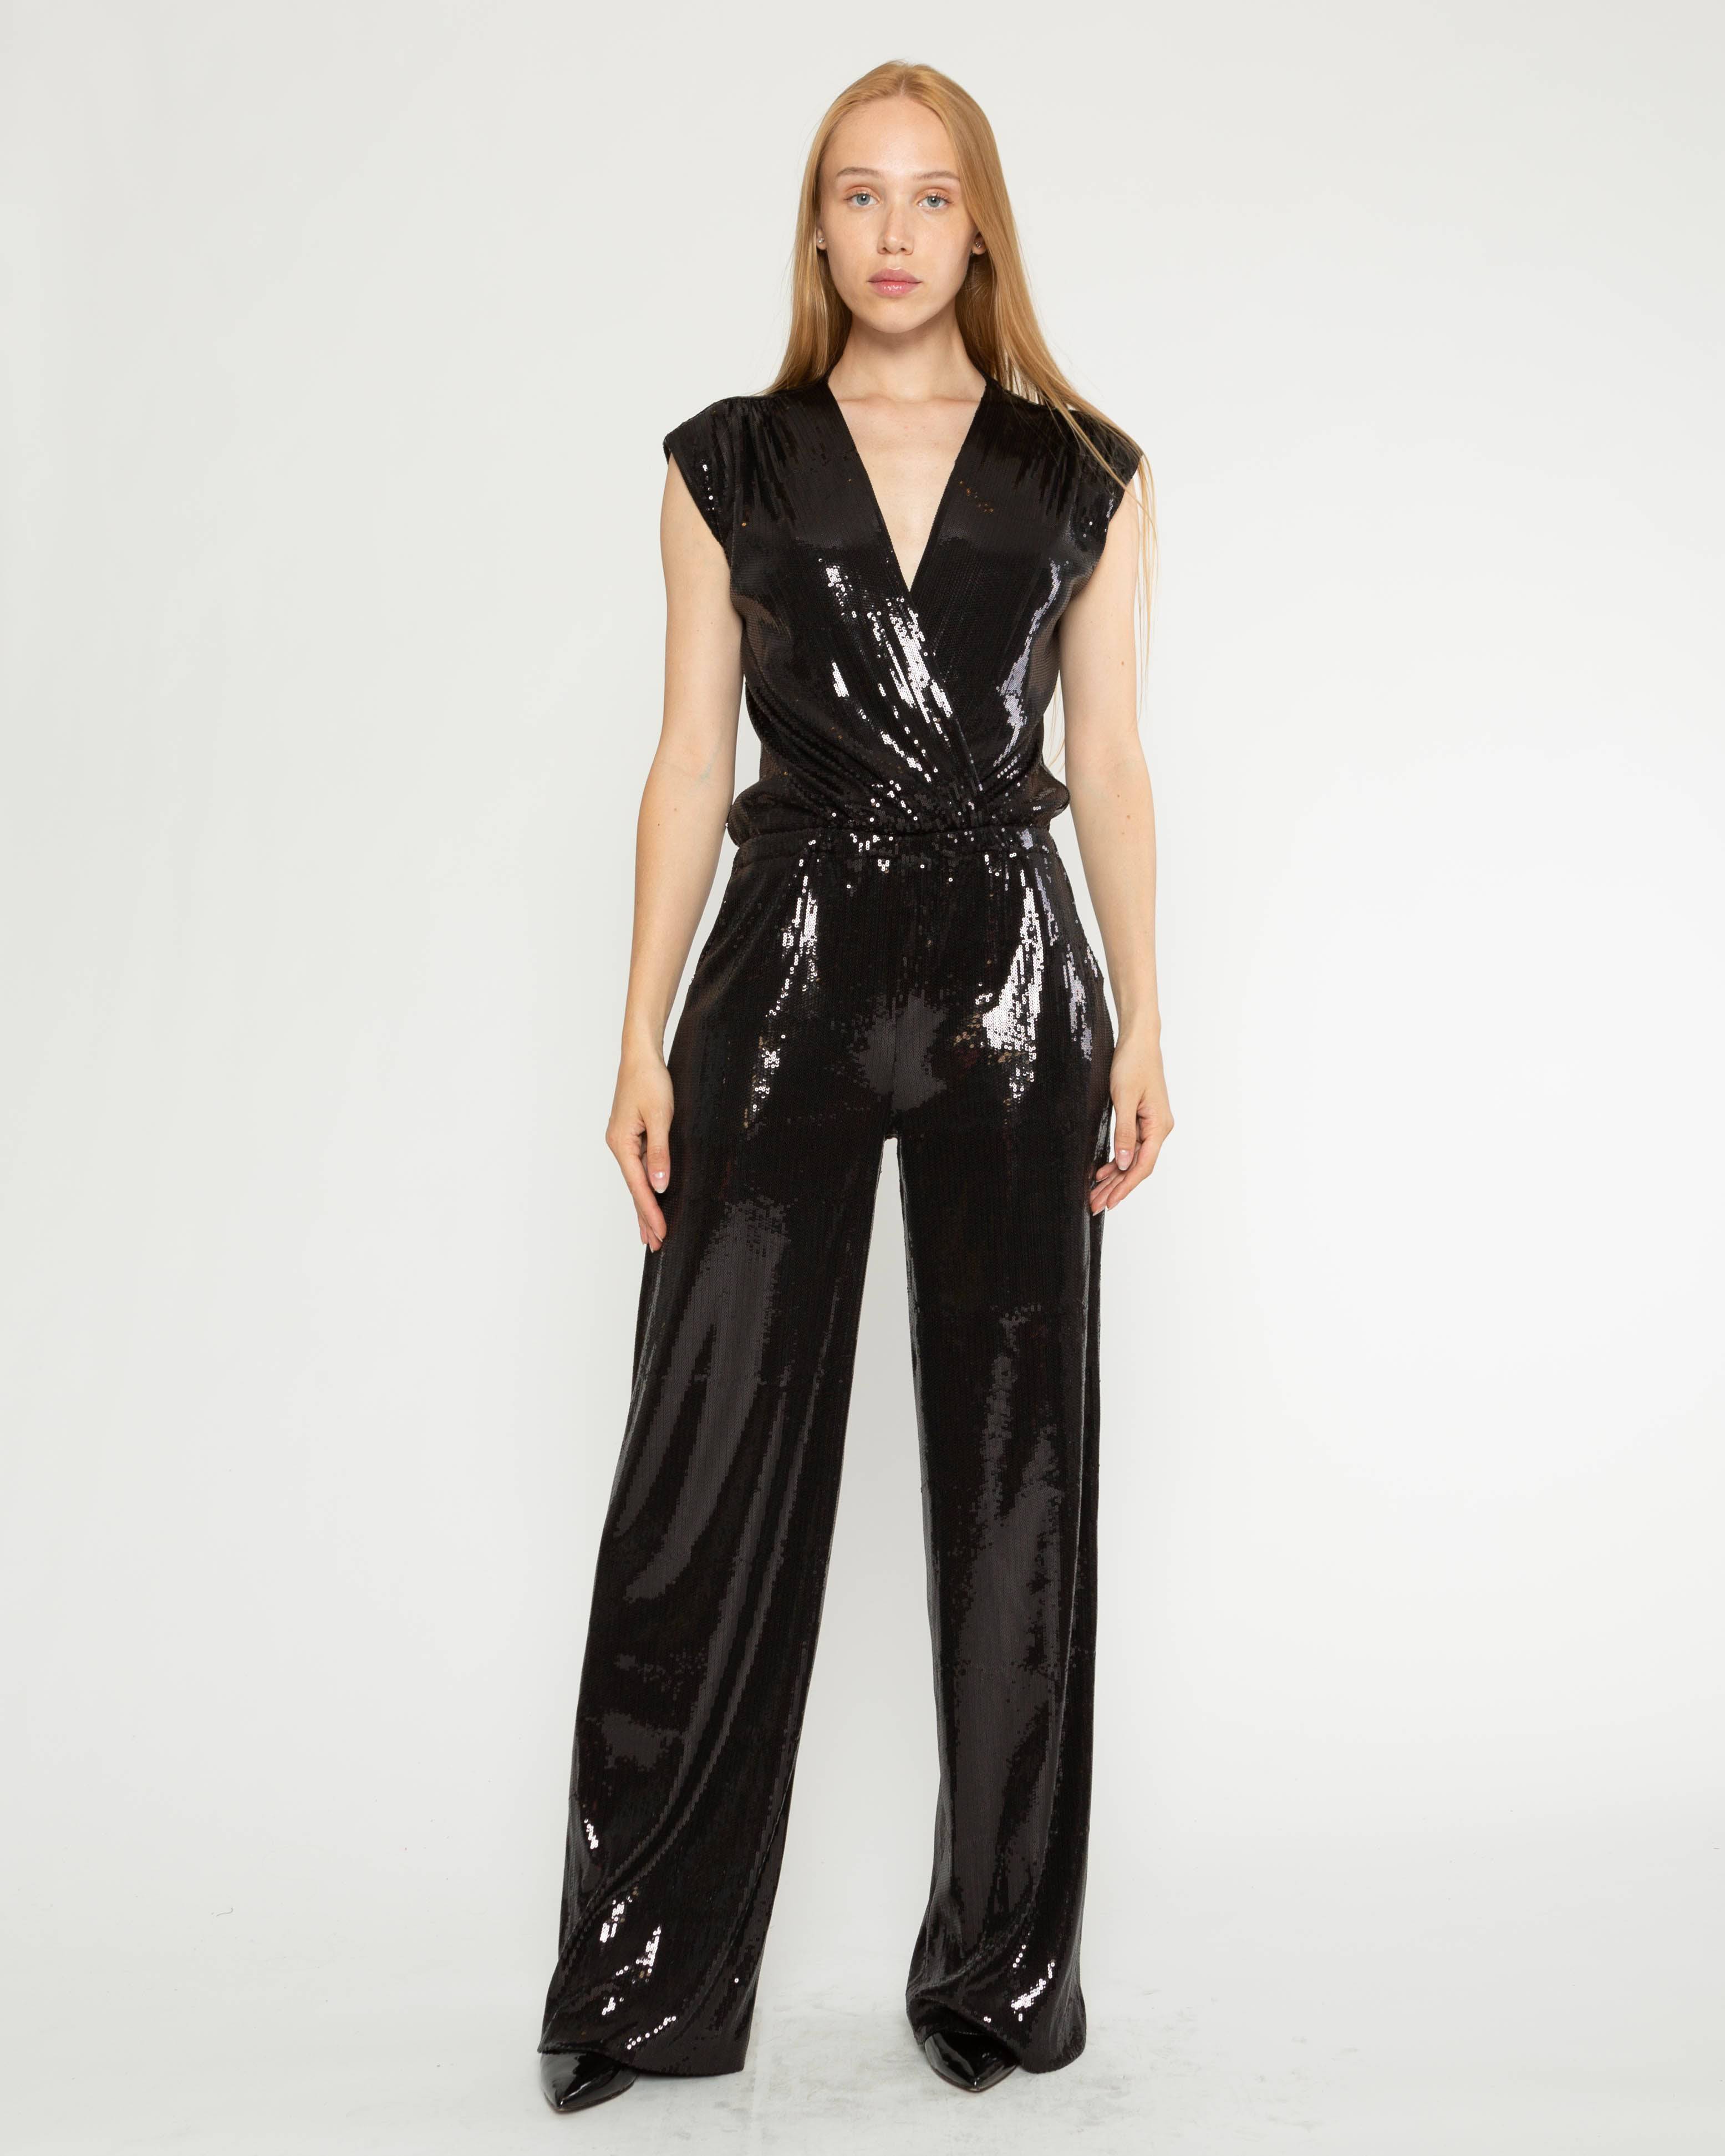 Ripley Rader Classic Jumpsuit, Black – Intrigue Fine Apparel